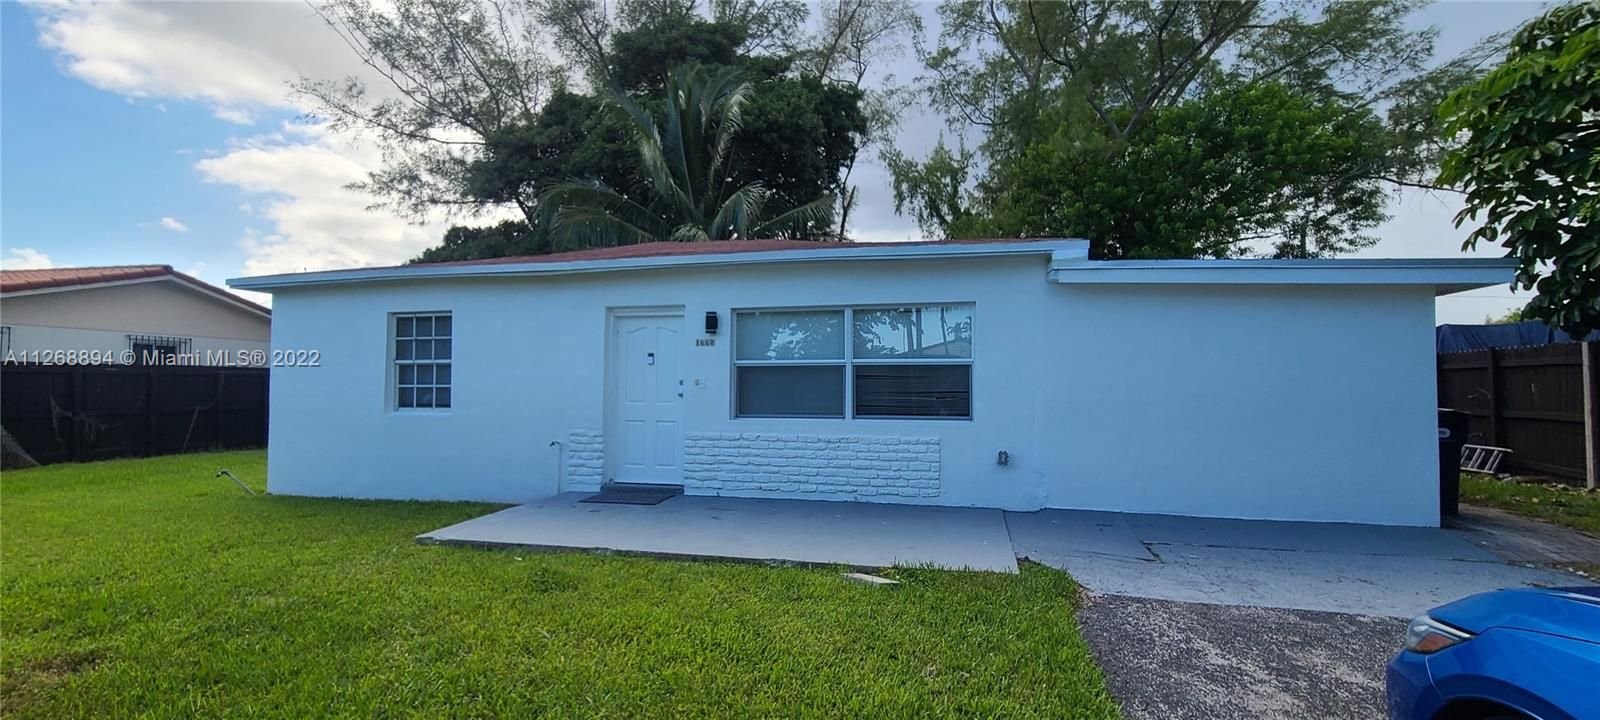 Real estate property located at 1660 69th Ave, Miami-Dade County, Miami, FL